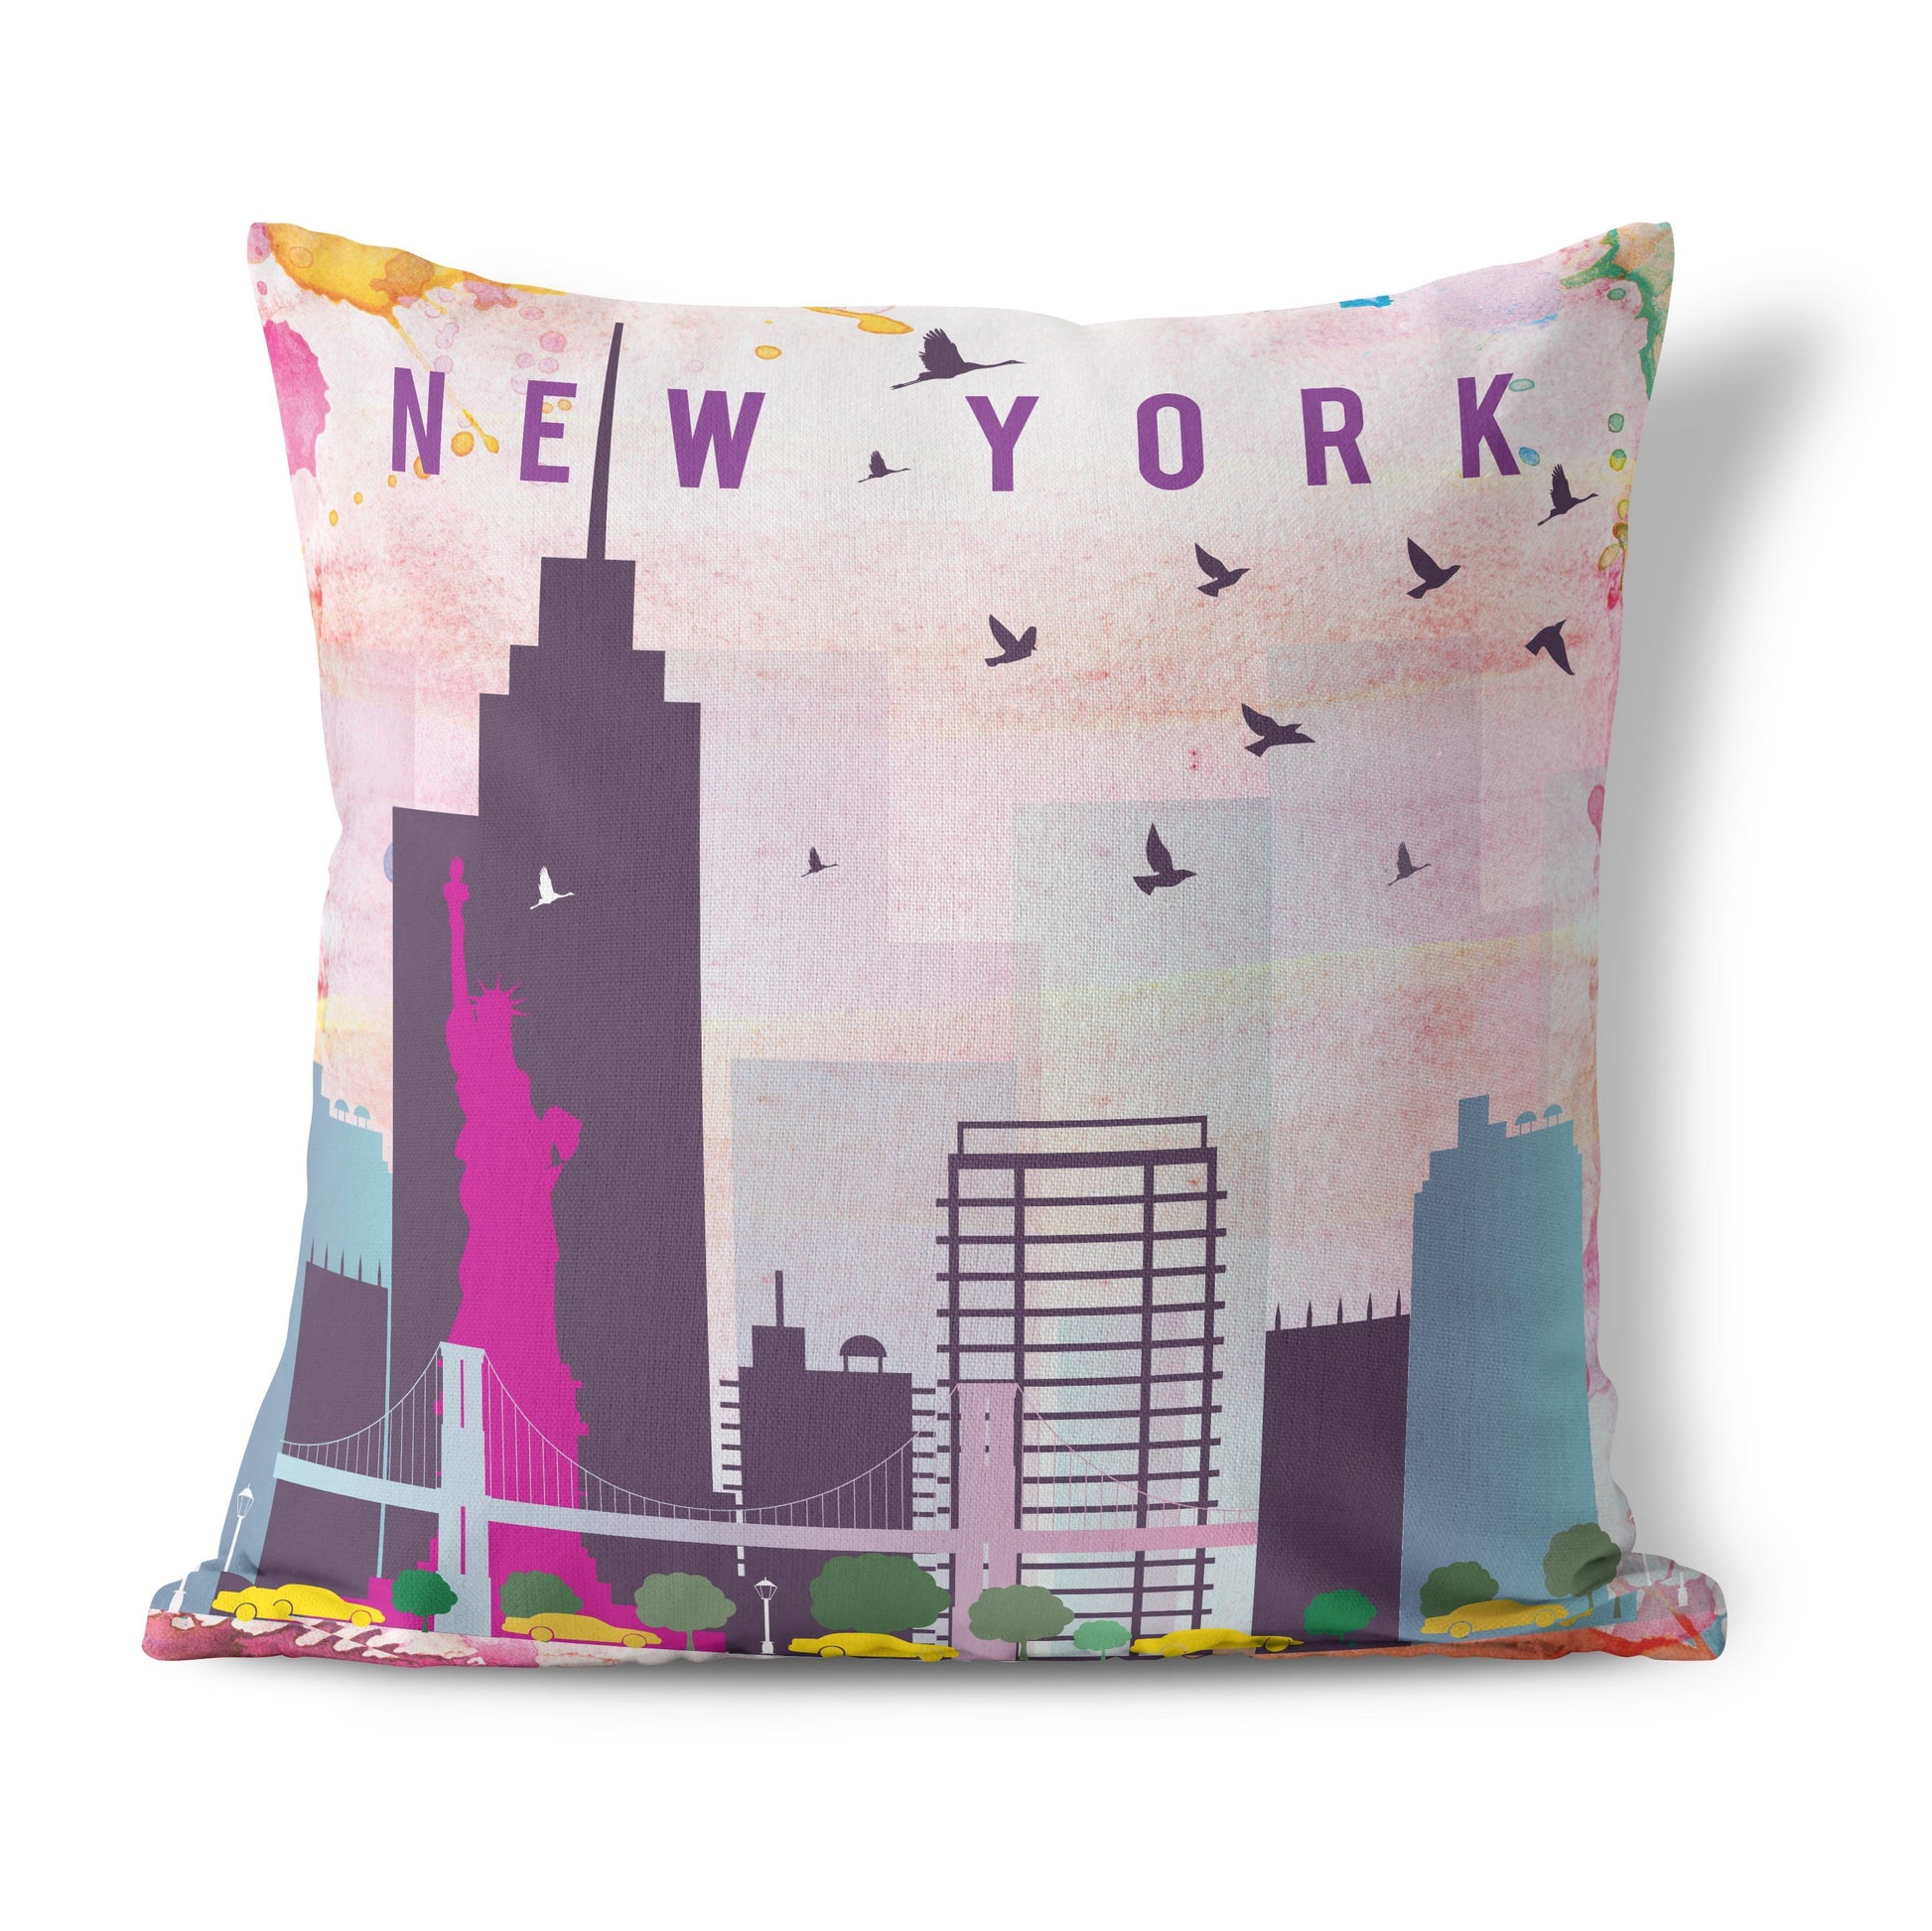 New York, New York Cushion